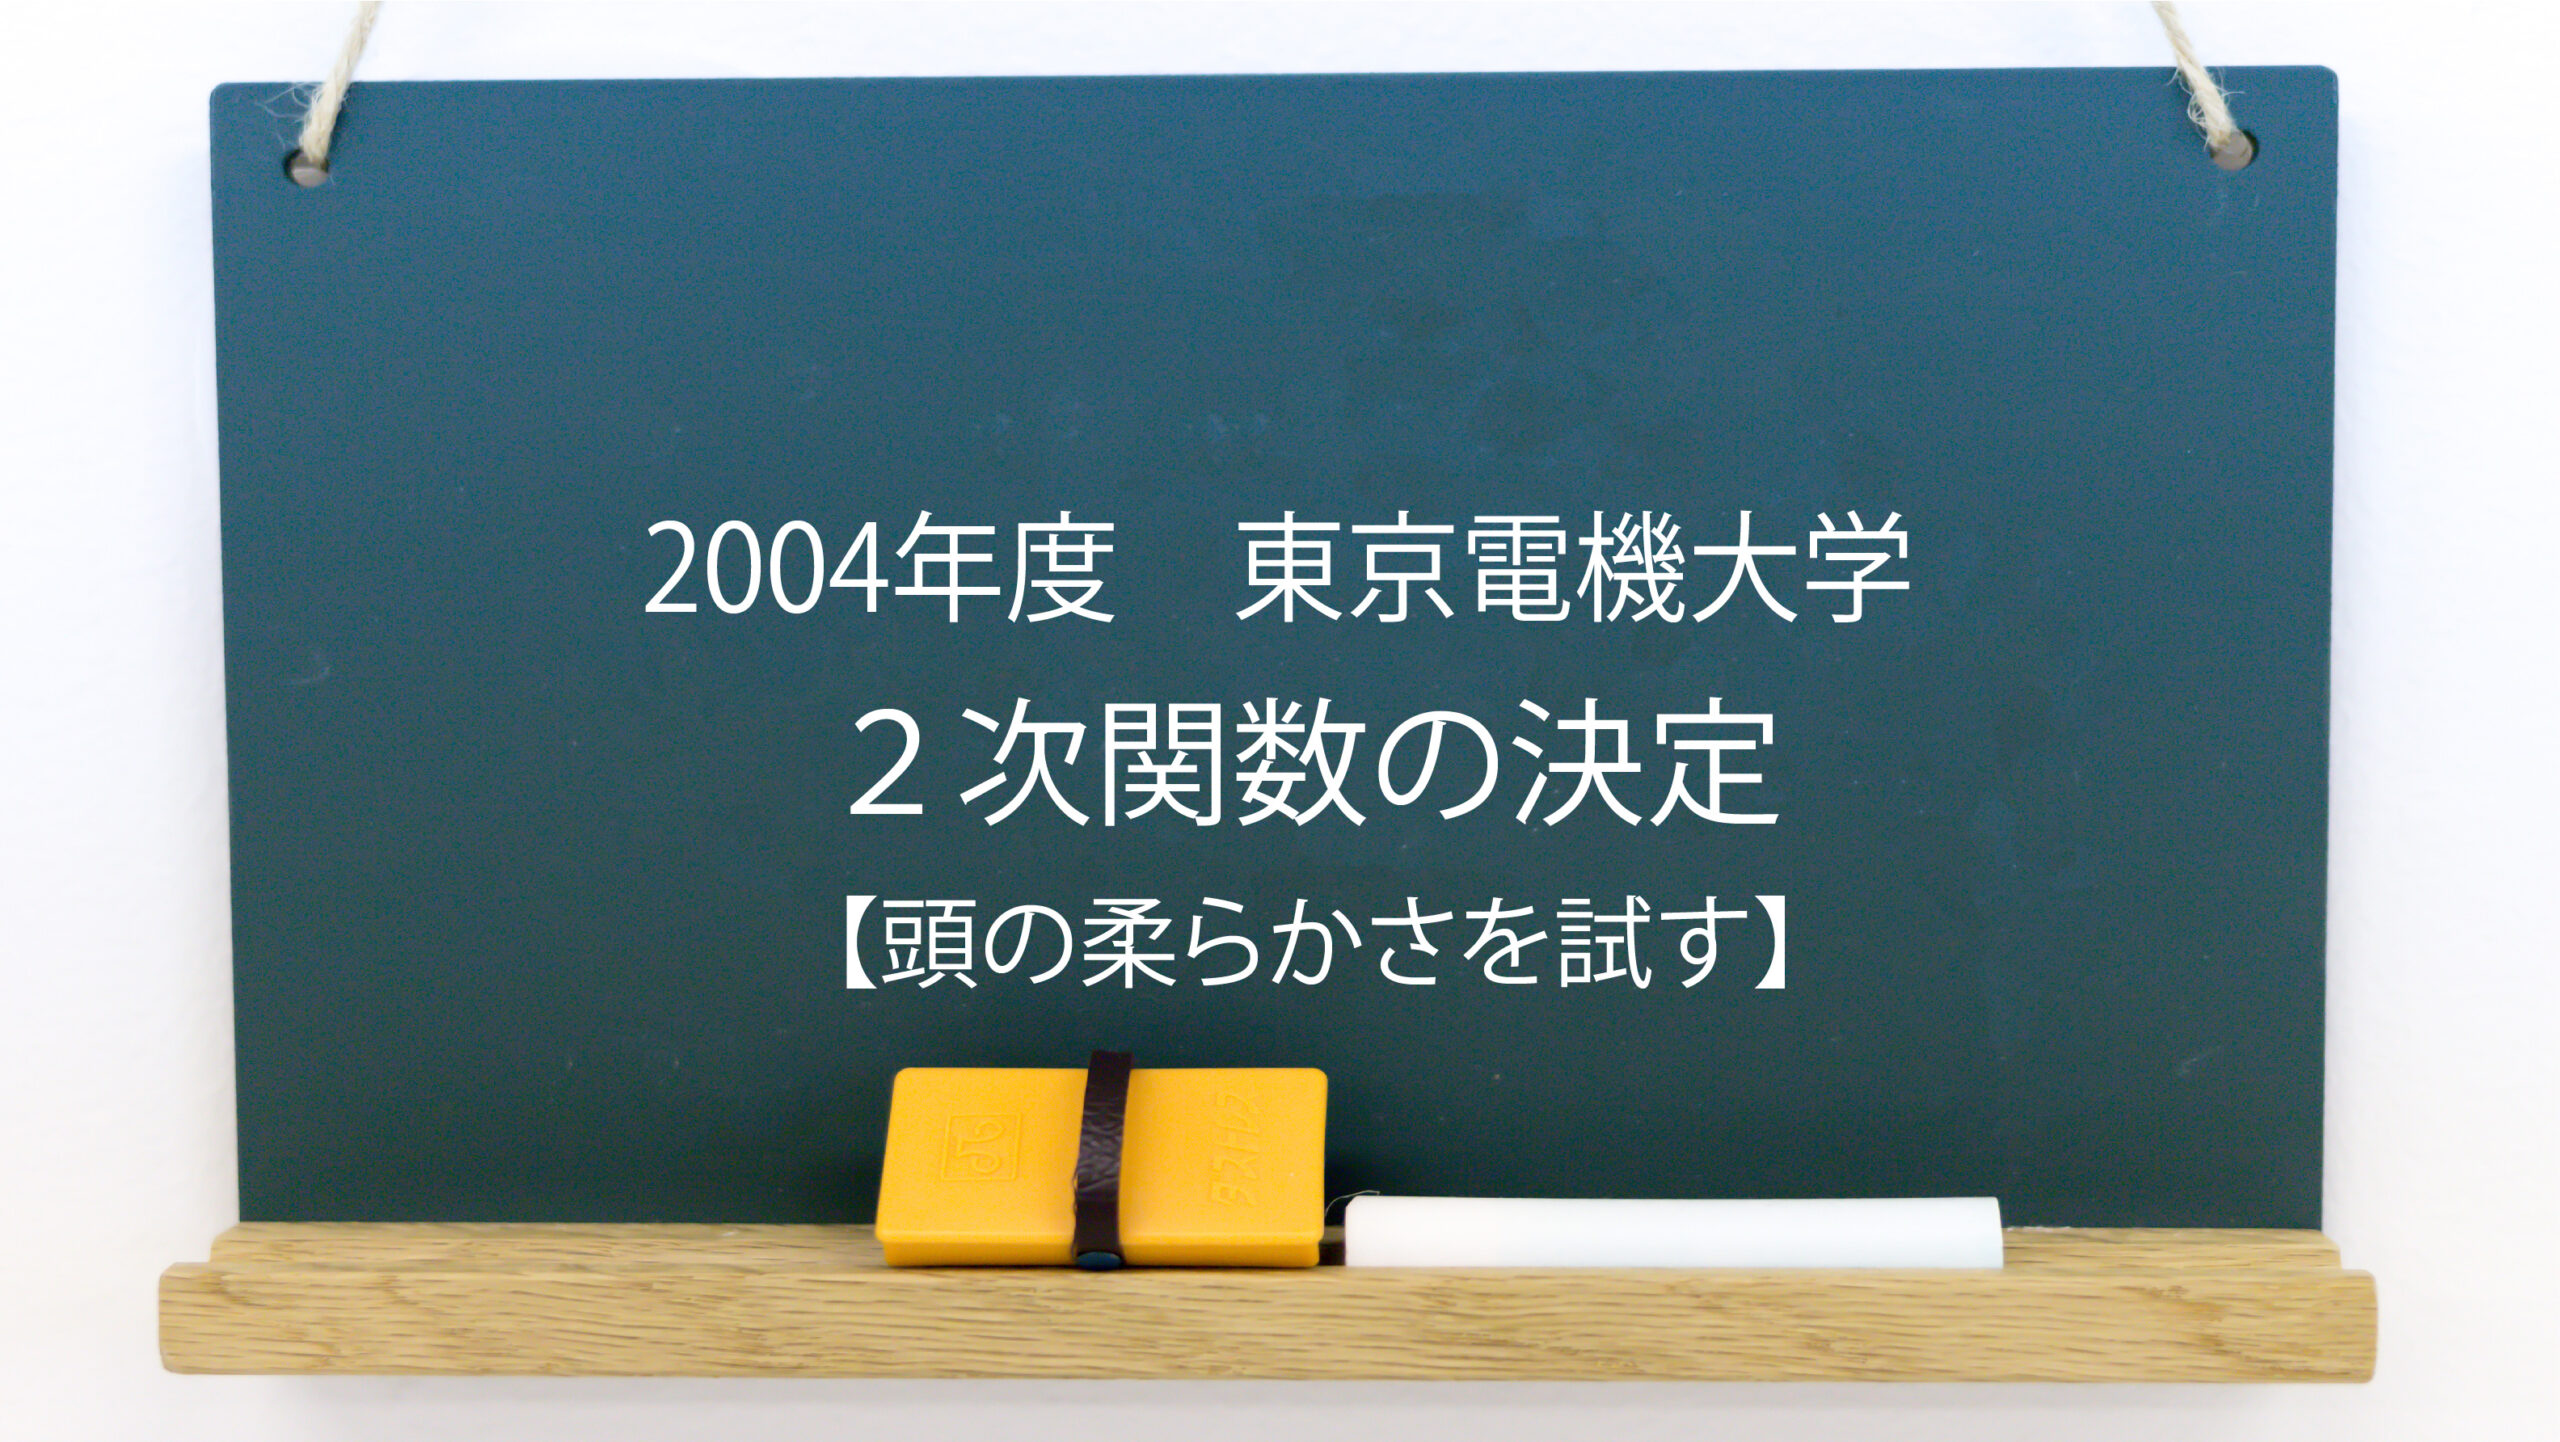 A01062642]東京電機大学 (2012年版 大学入試シリーズ)-